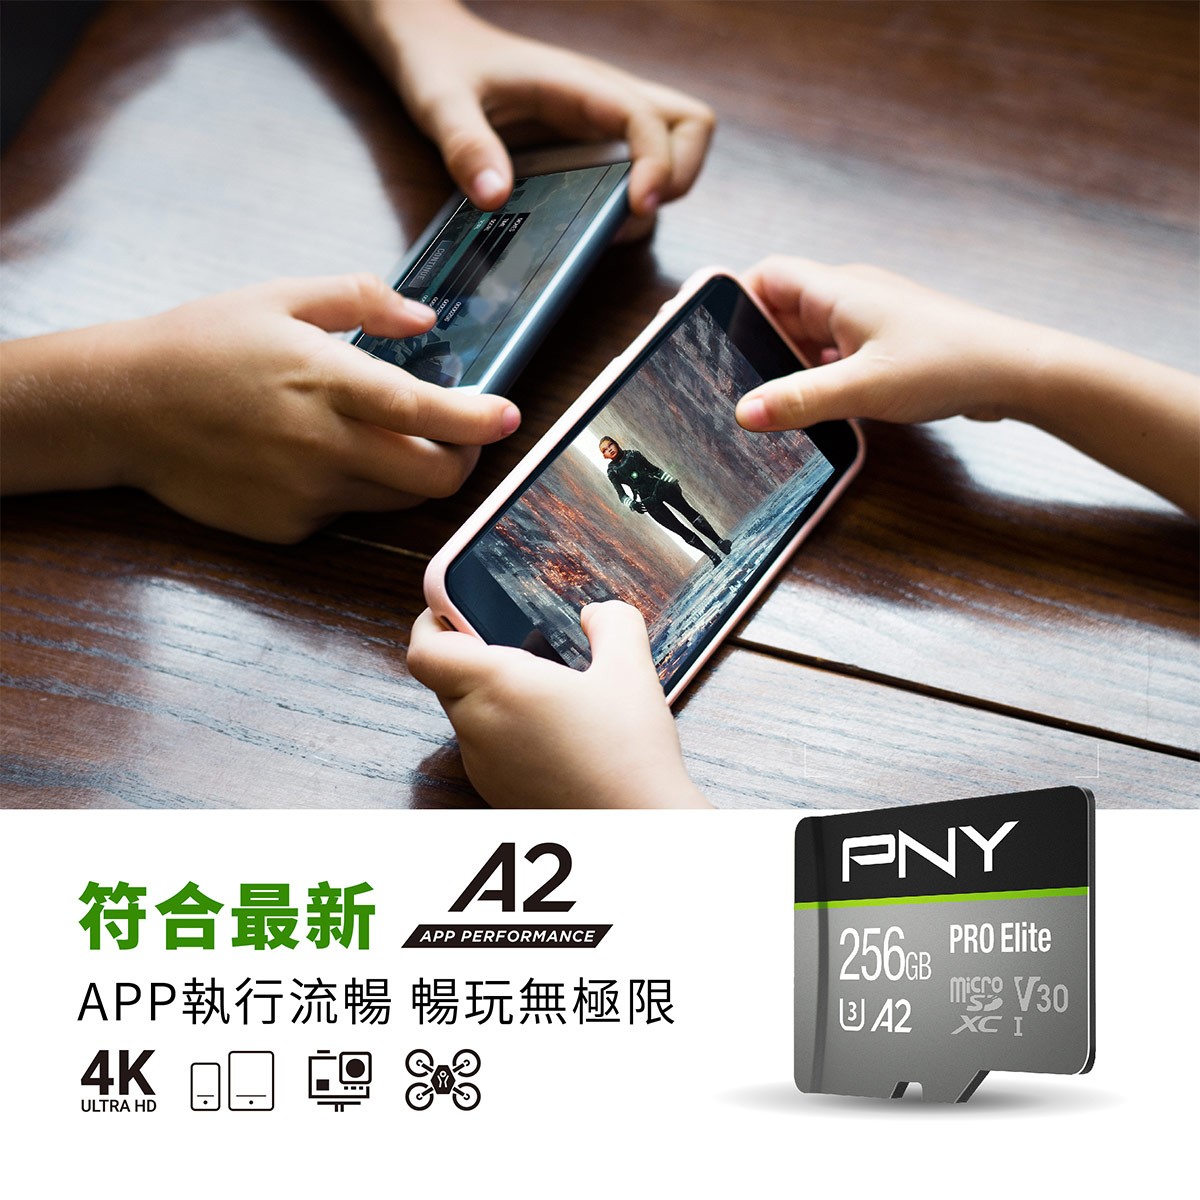 PNY 256GB記憶卡，APP執行流暢，暢玩無極限。